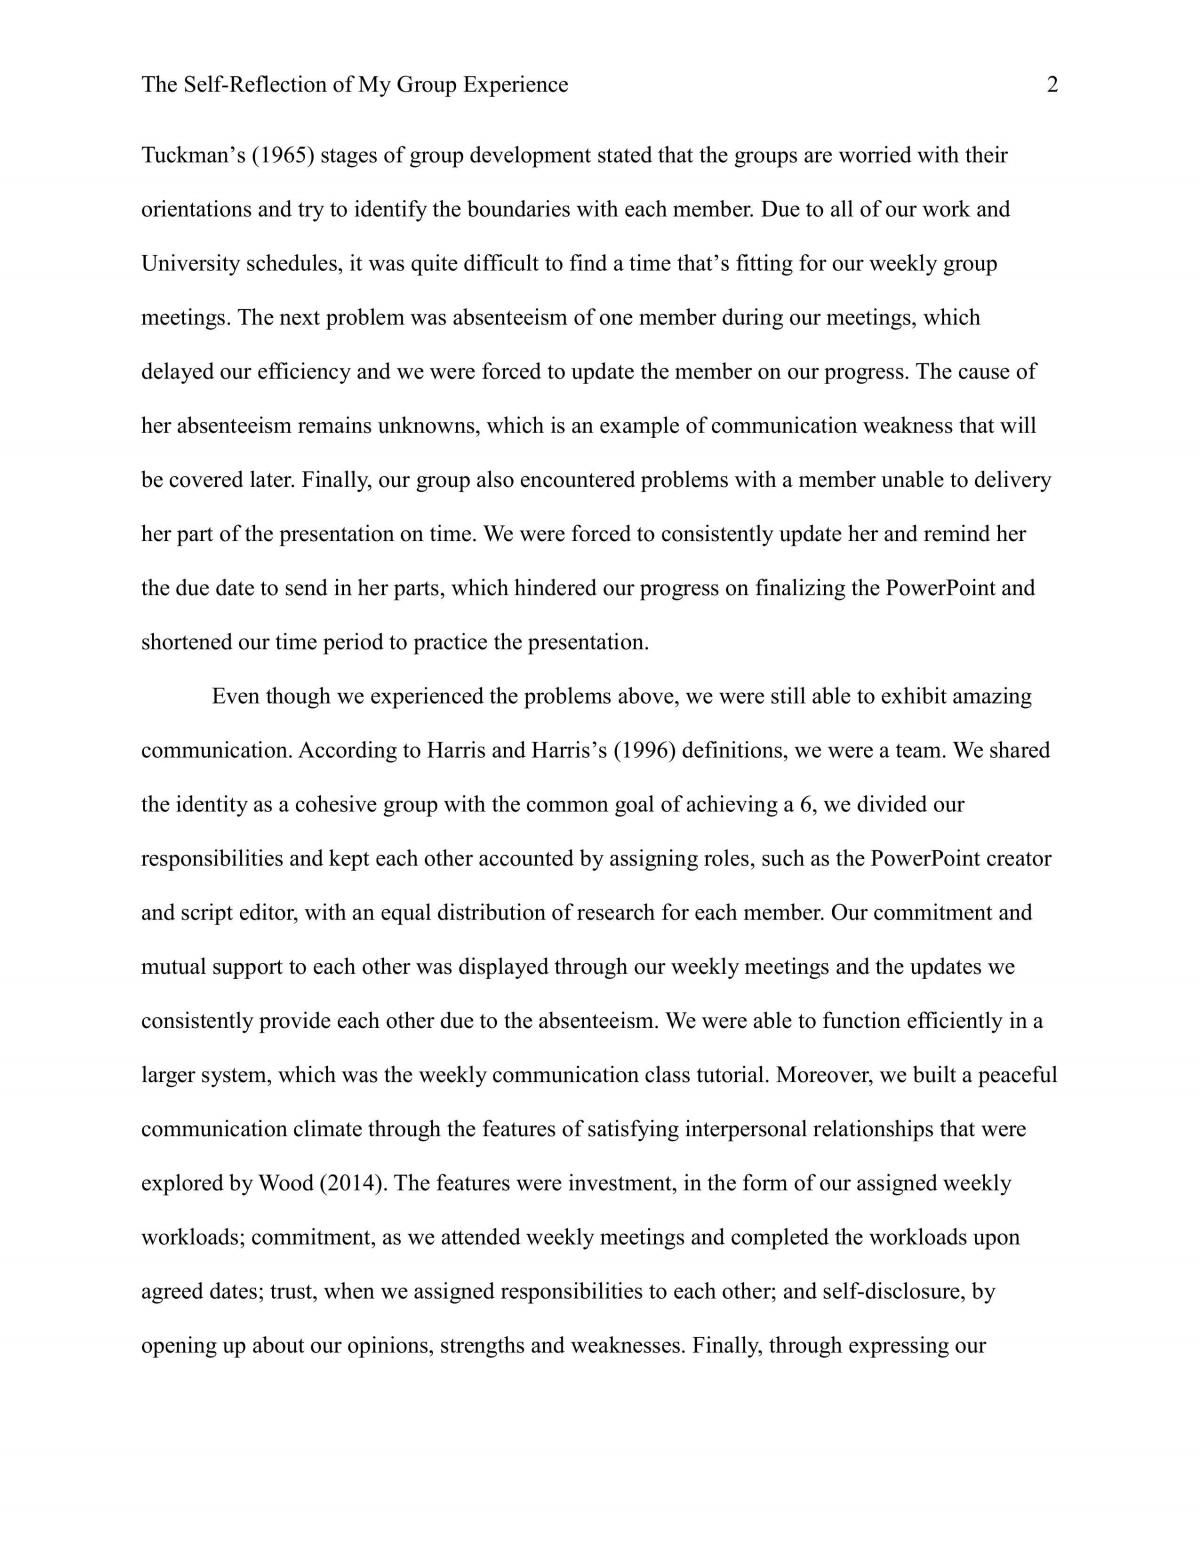 Final COMU1030 Reflection Essay  - Page 2